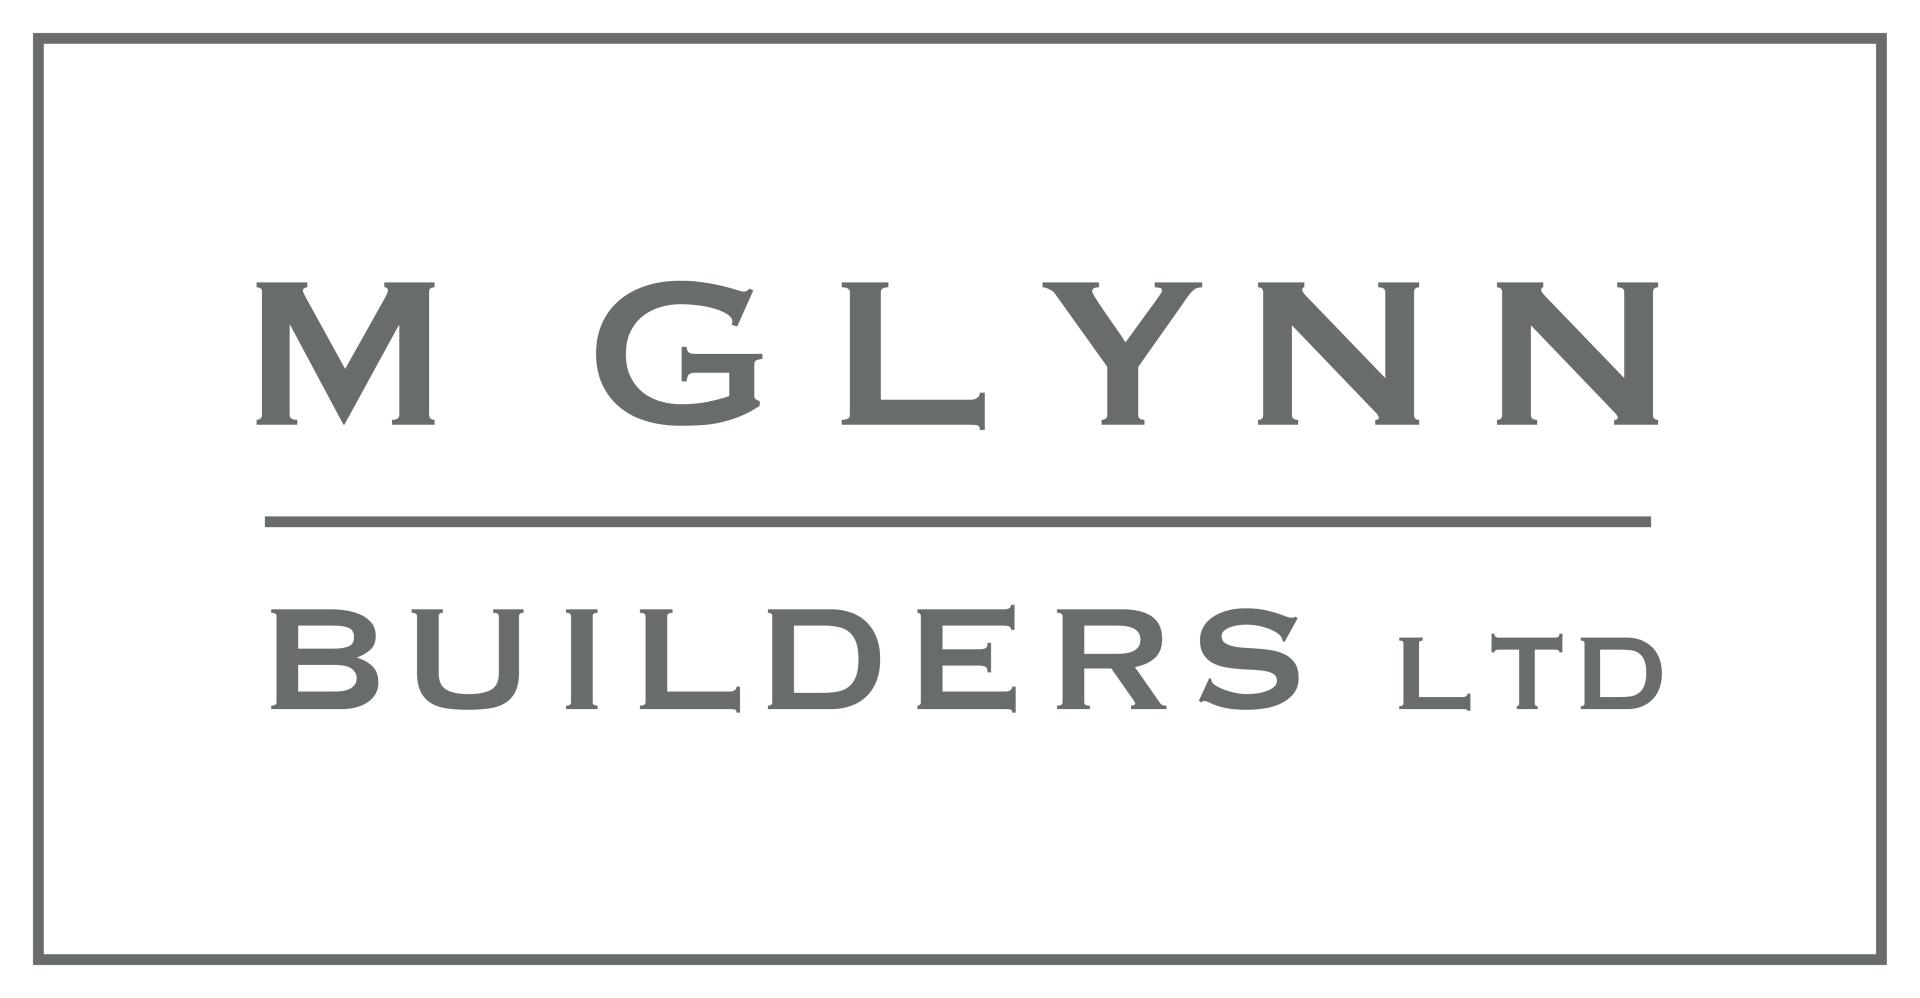 M Glynn Builders